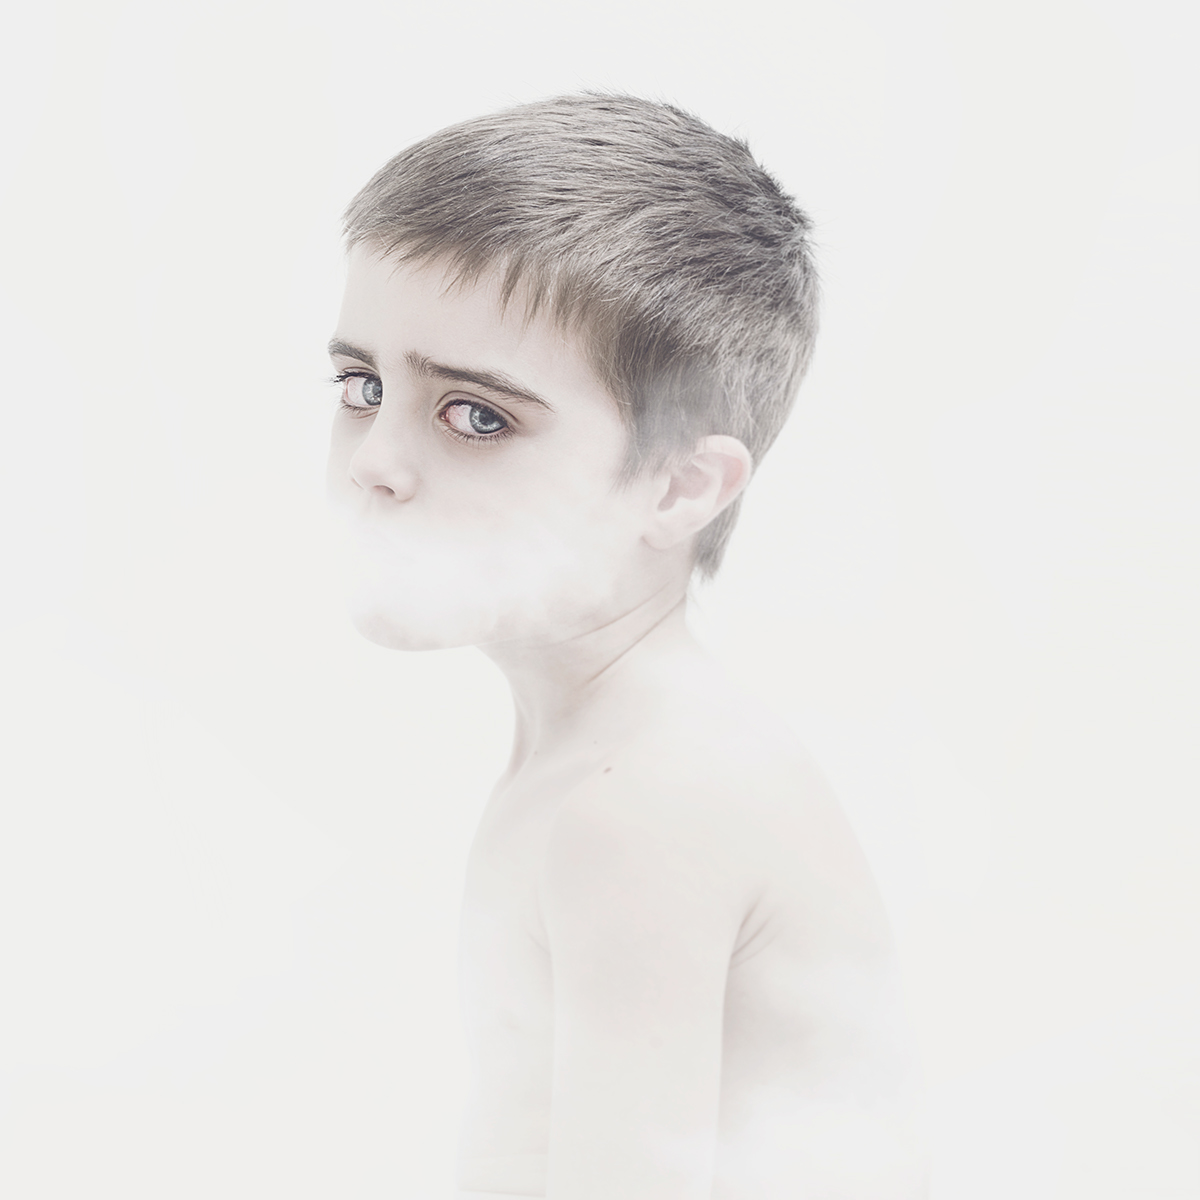 Twin Pain Introspective Portrait Series By Mikeila Borgia 2